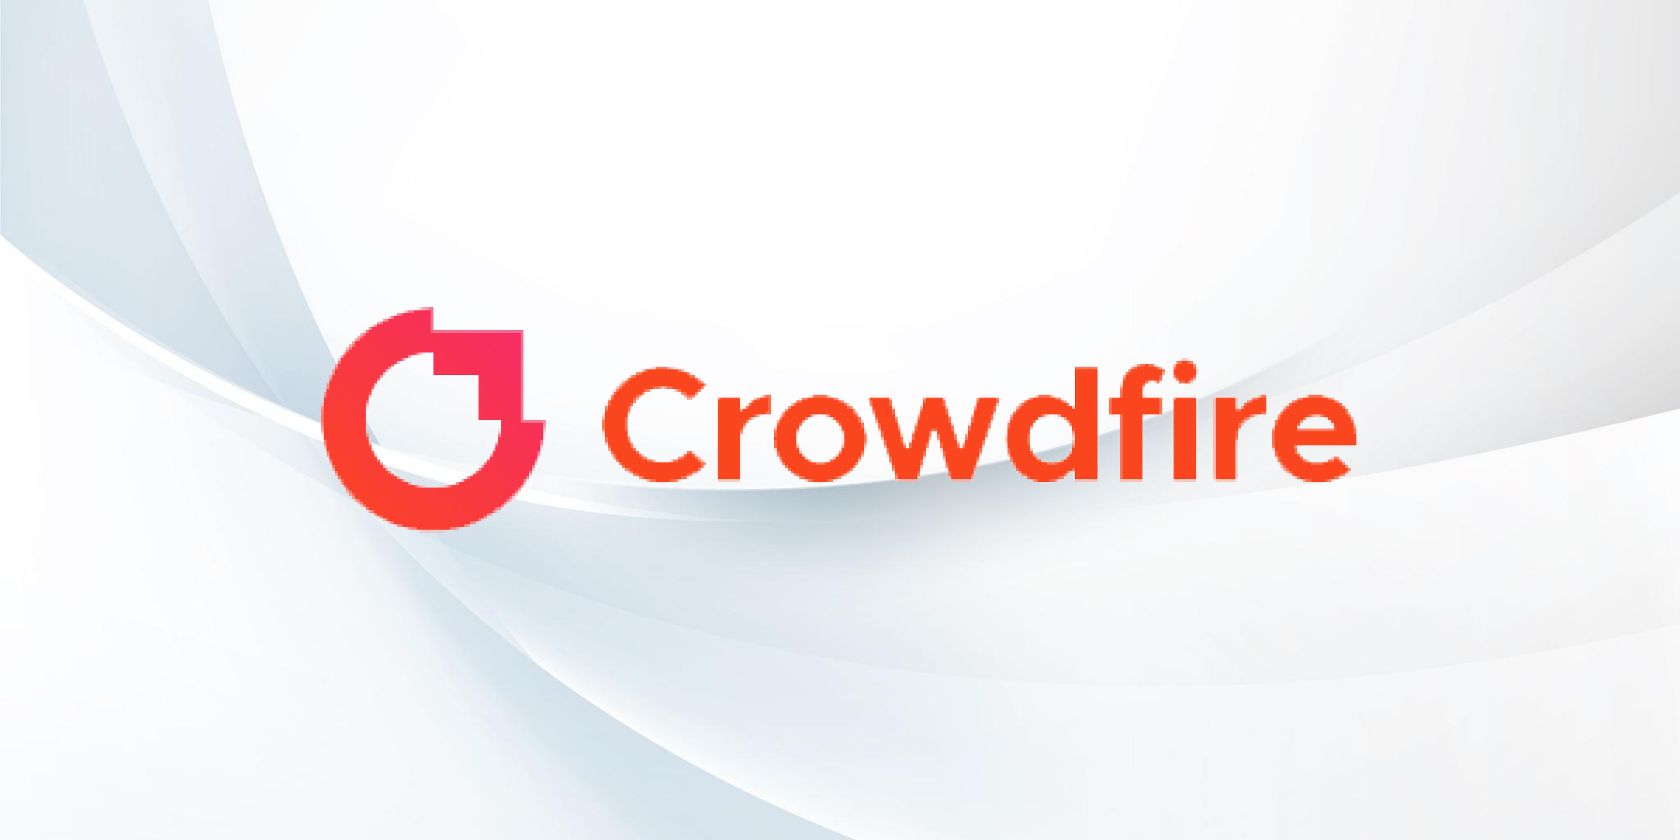 Visualization of Crowdfire logo